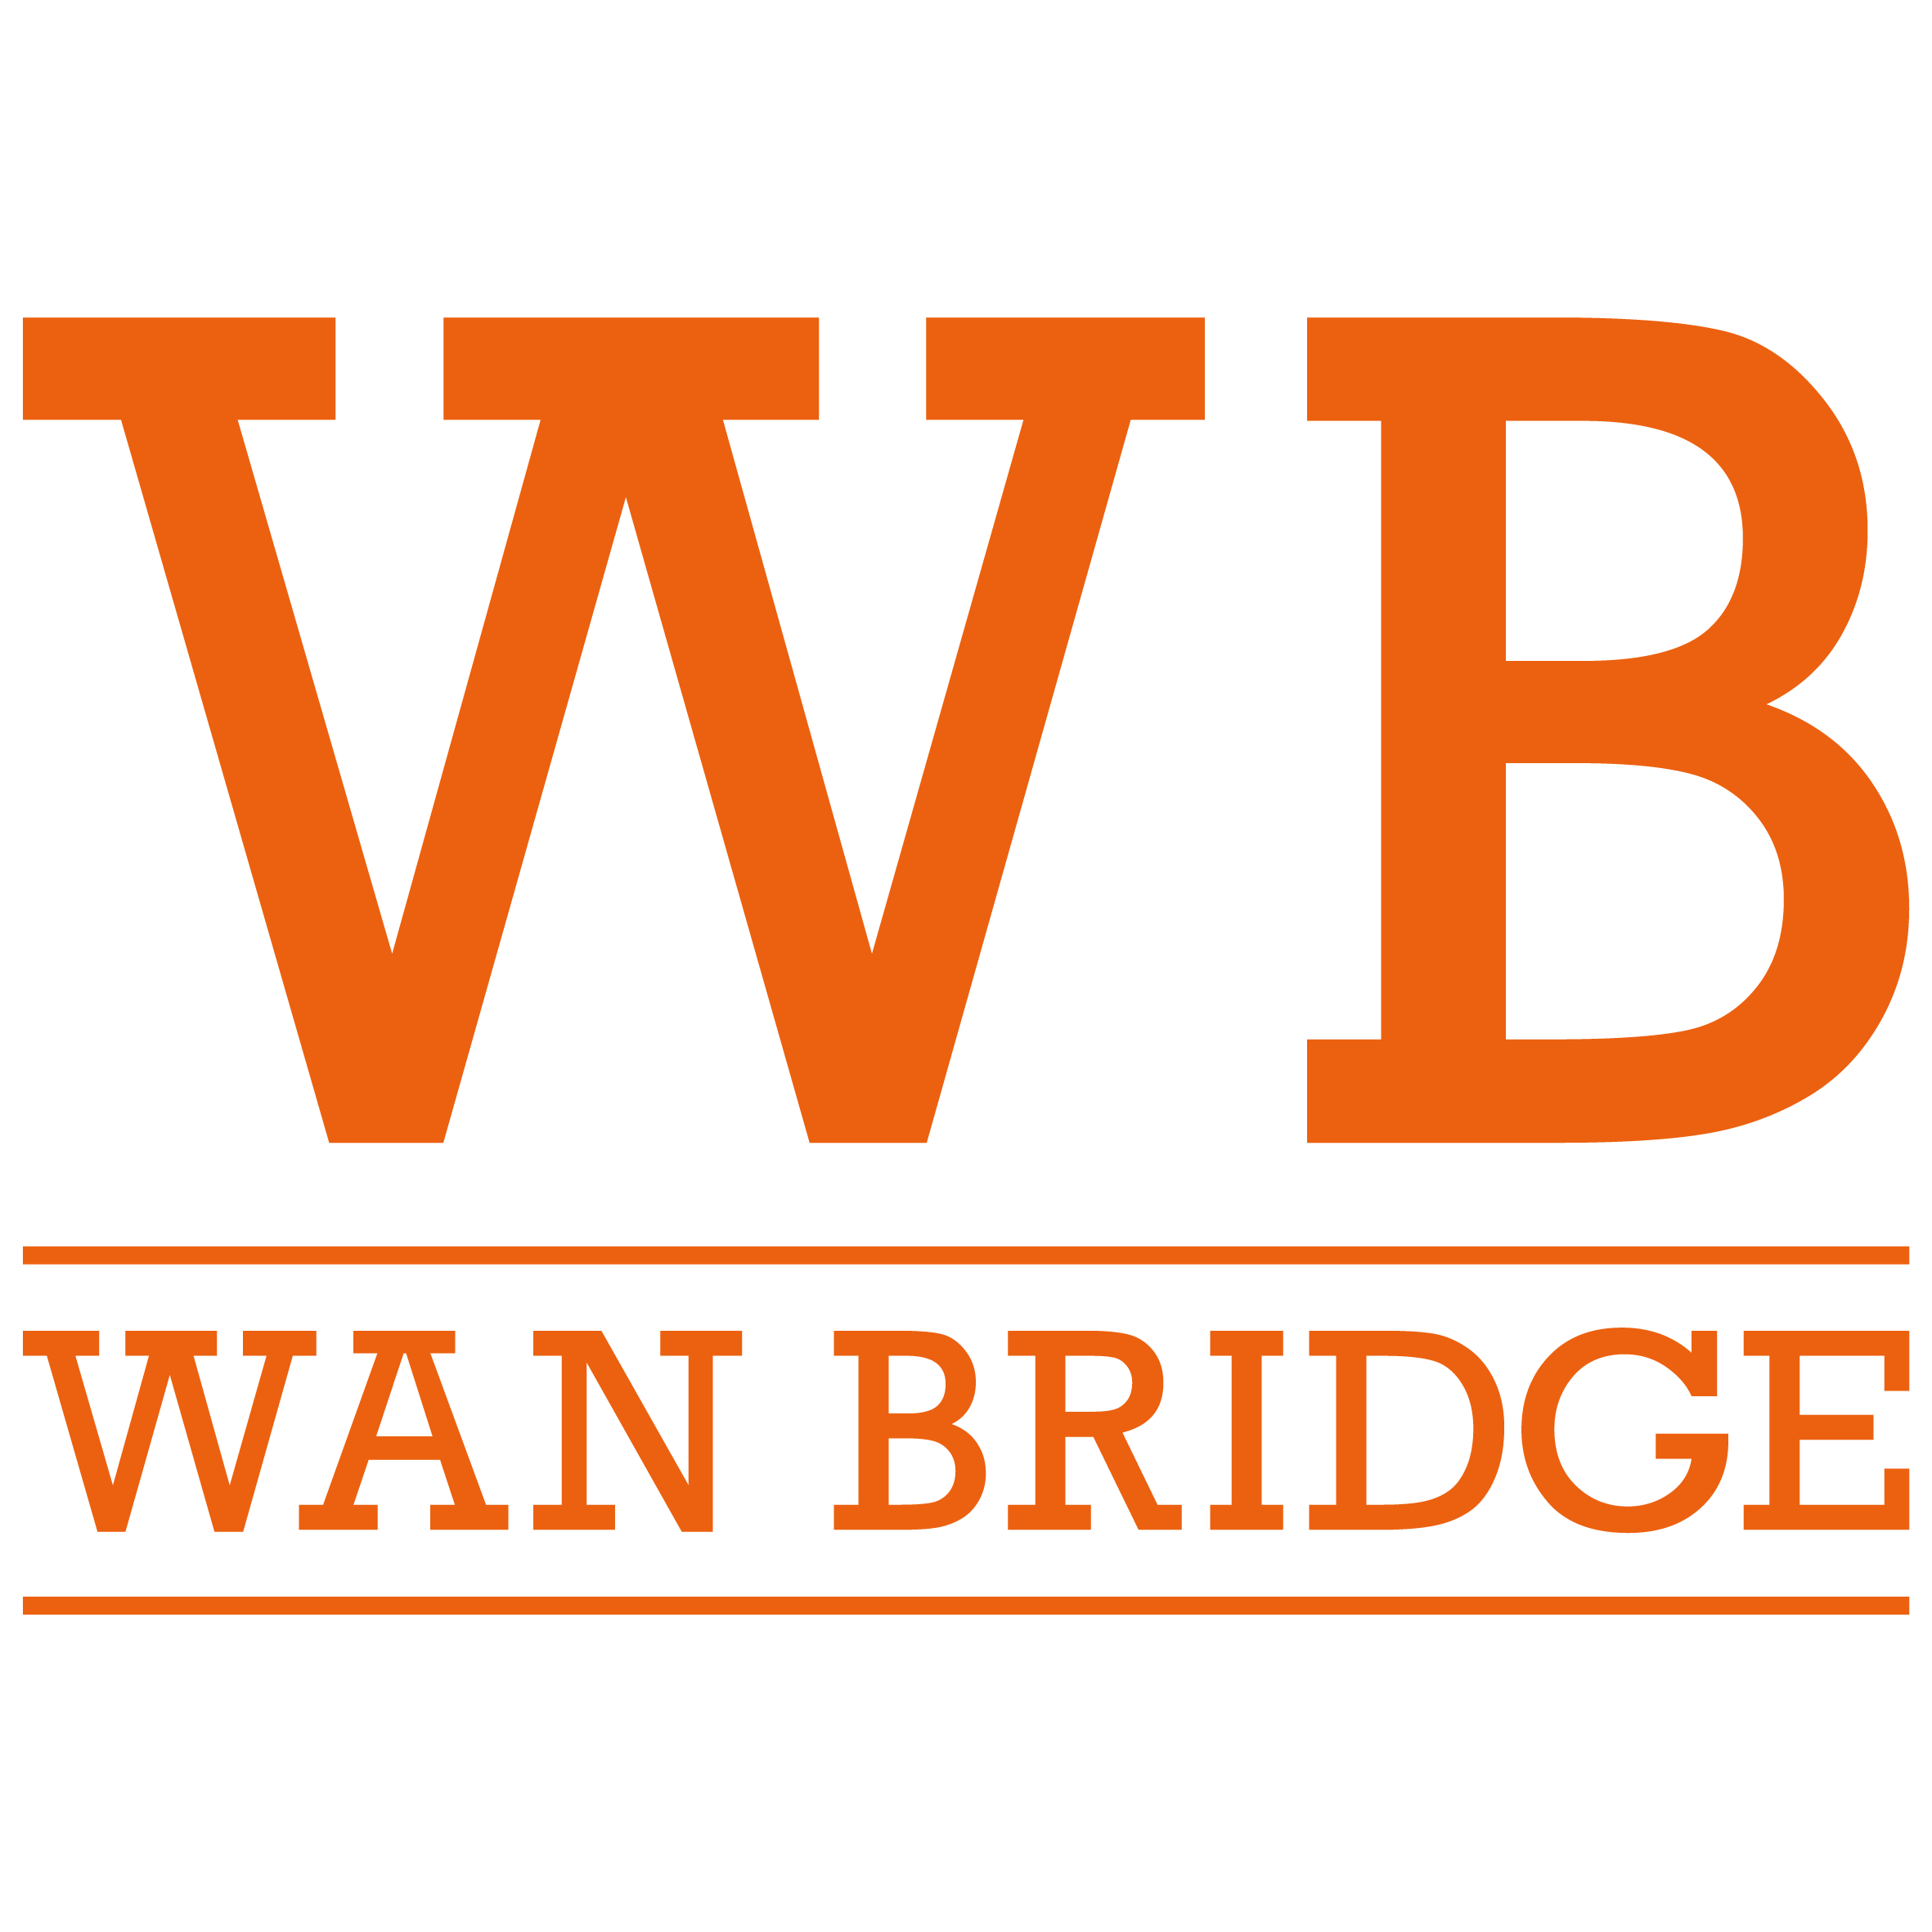 Wan Bridge Opens Sonata Estates in Waxahachie, Giving Residents a